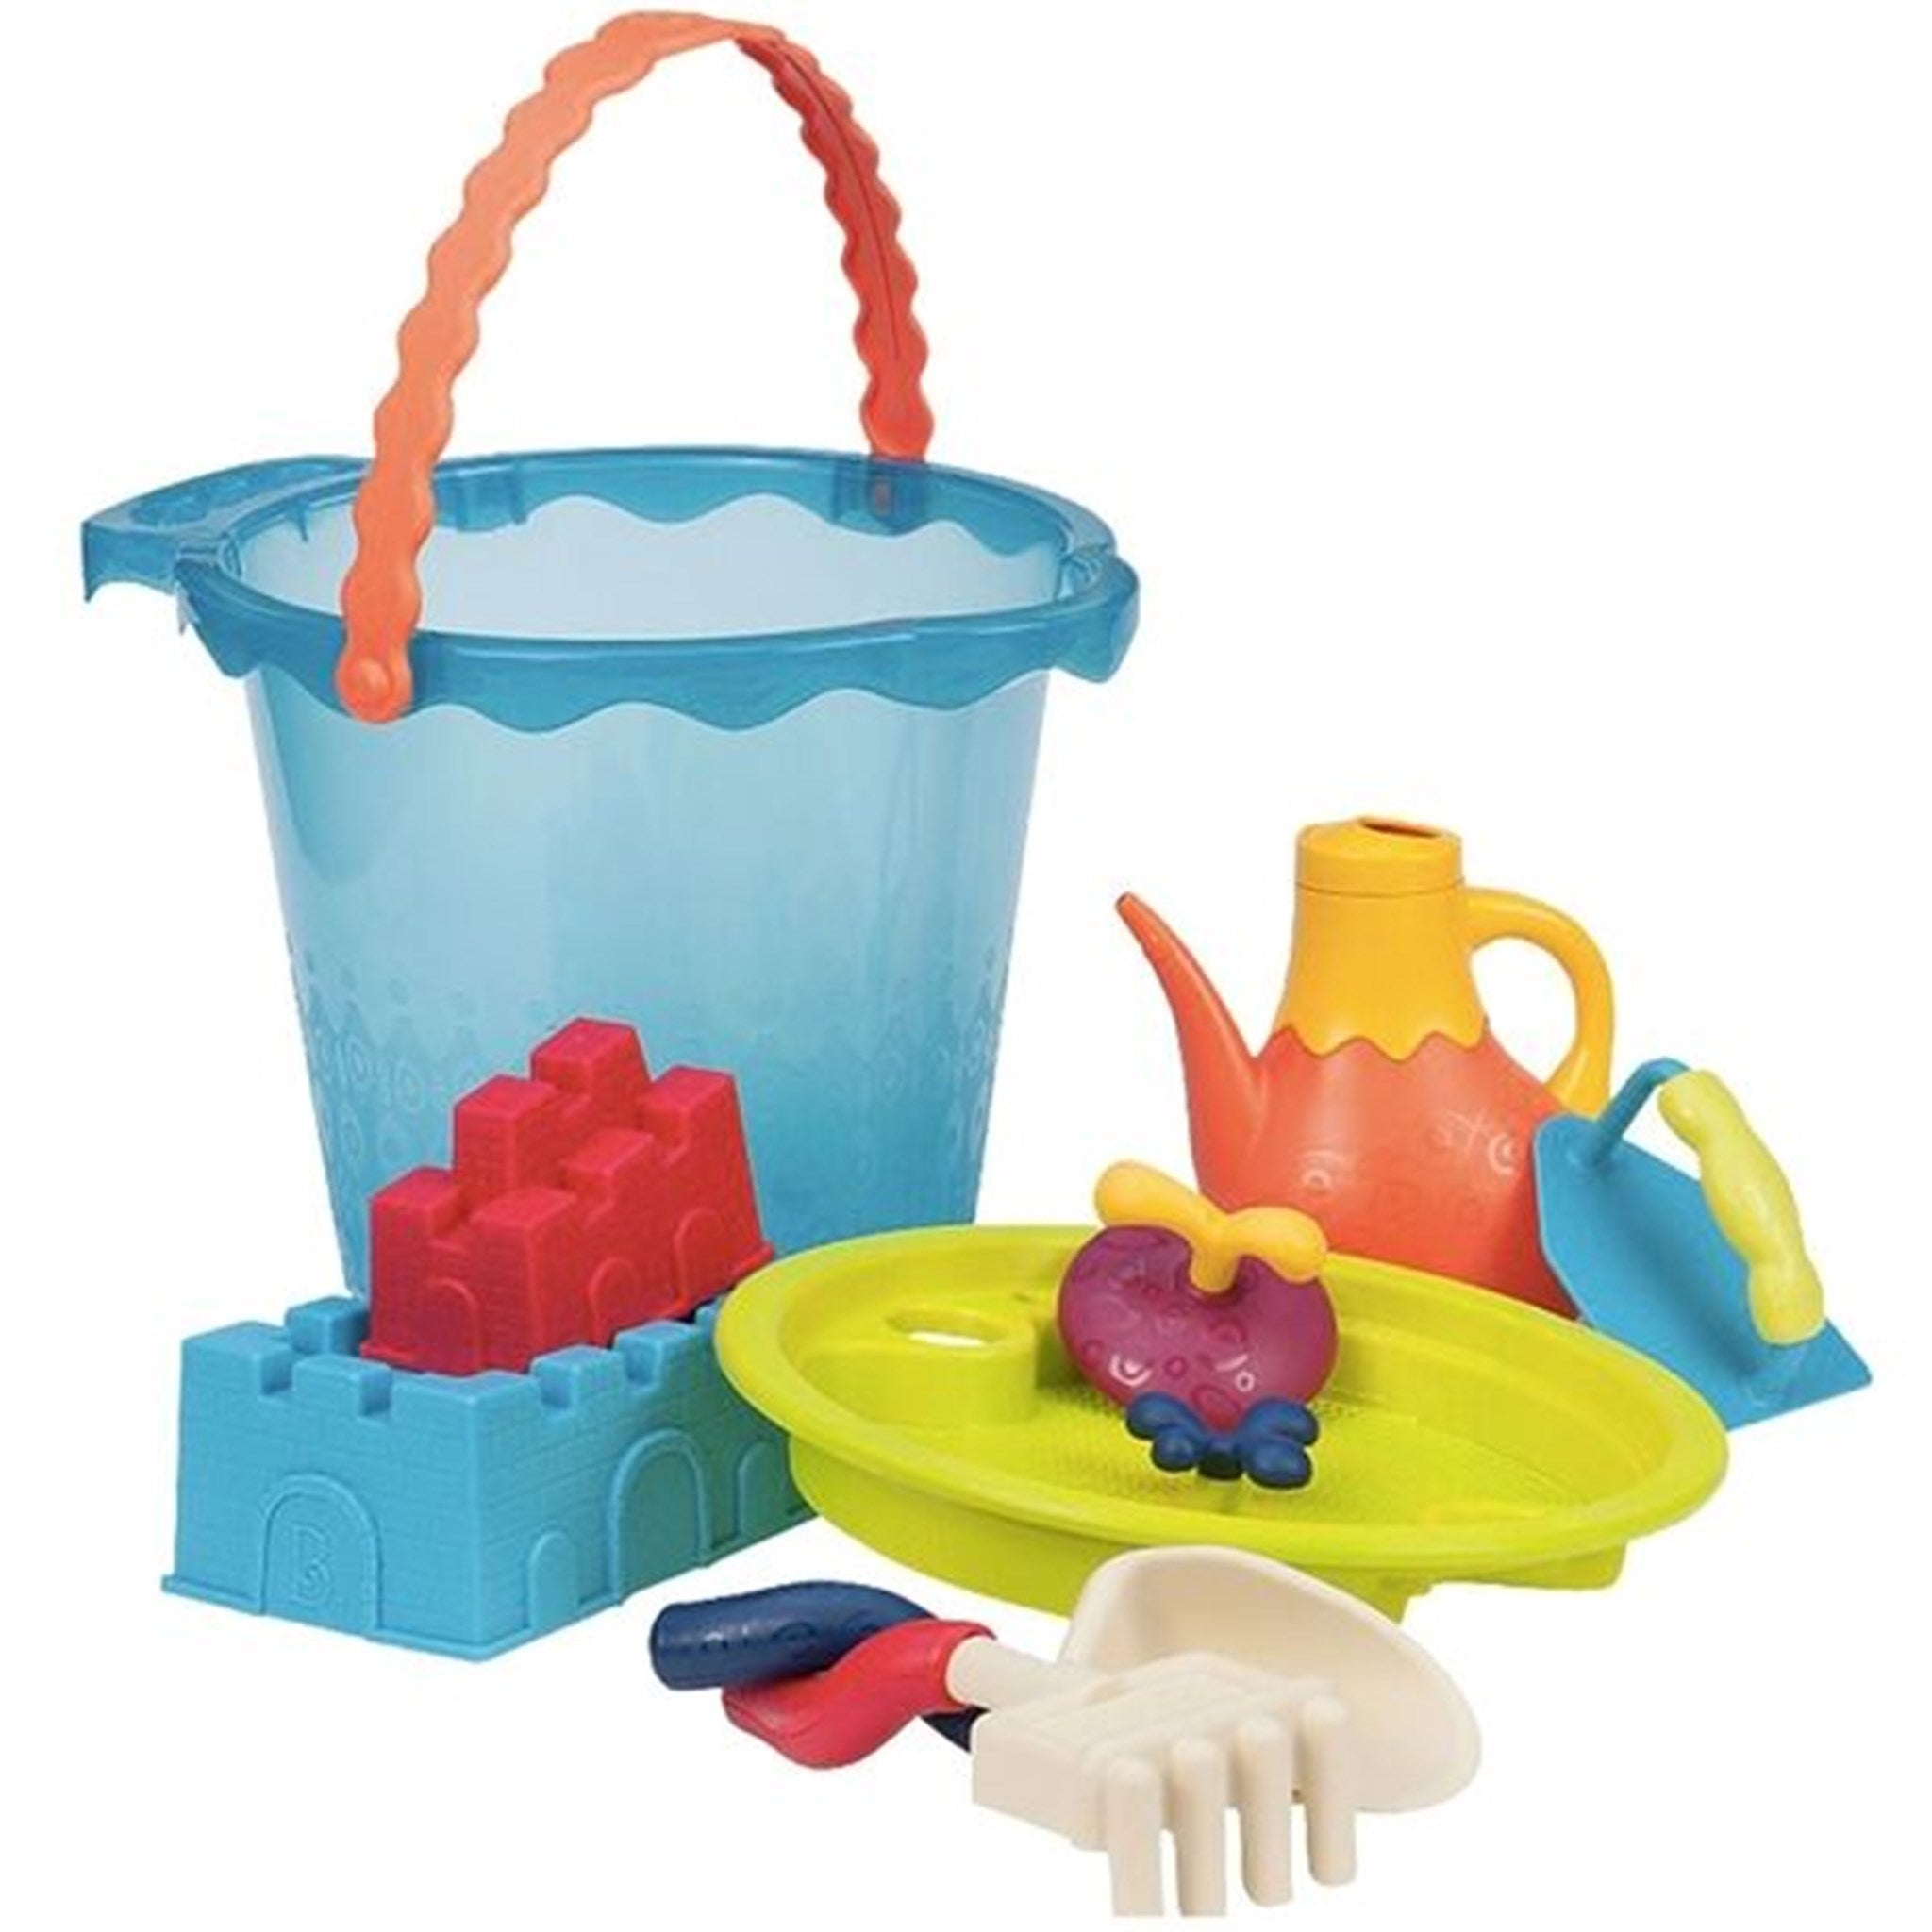 B-toys Shore Thing - Bucket Set Blue